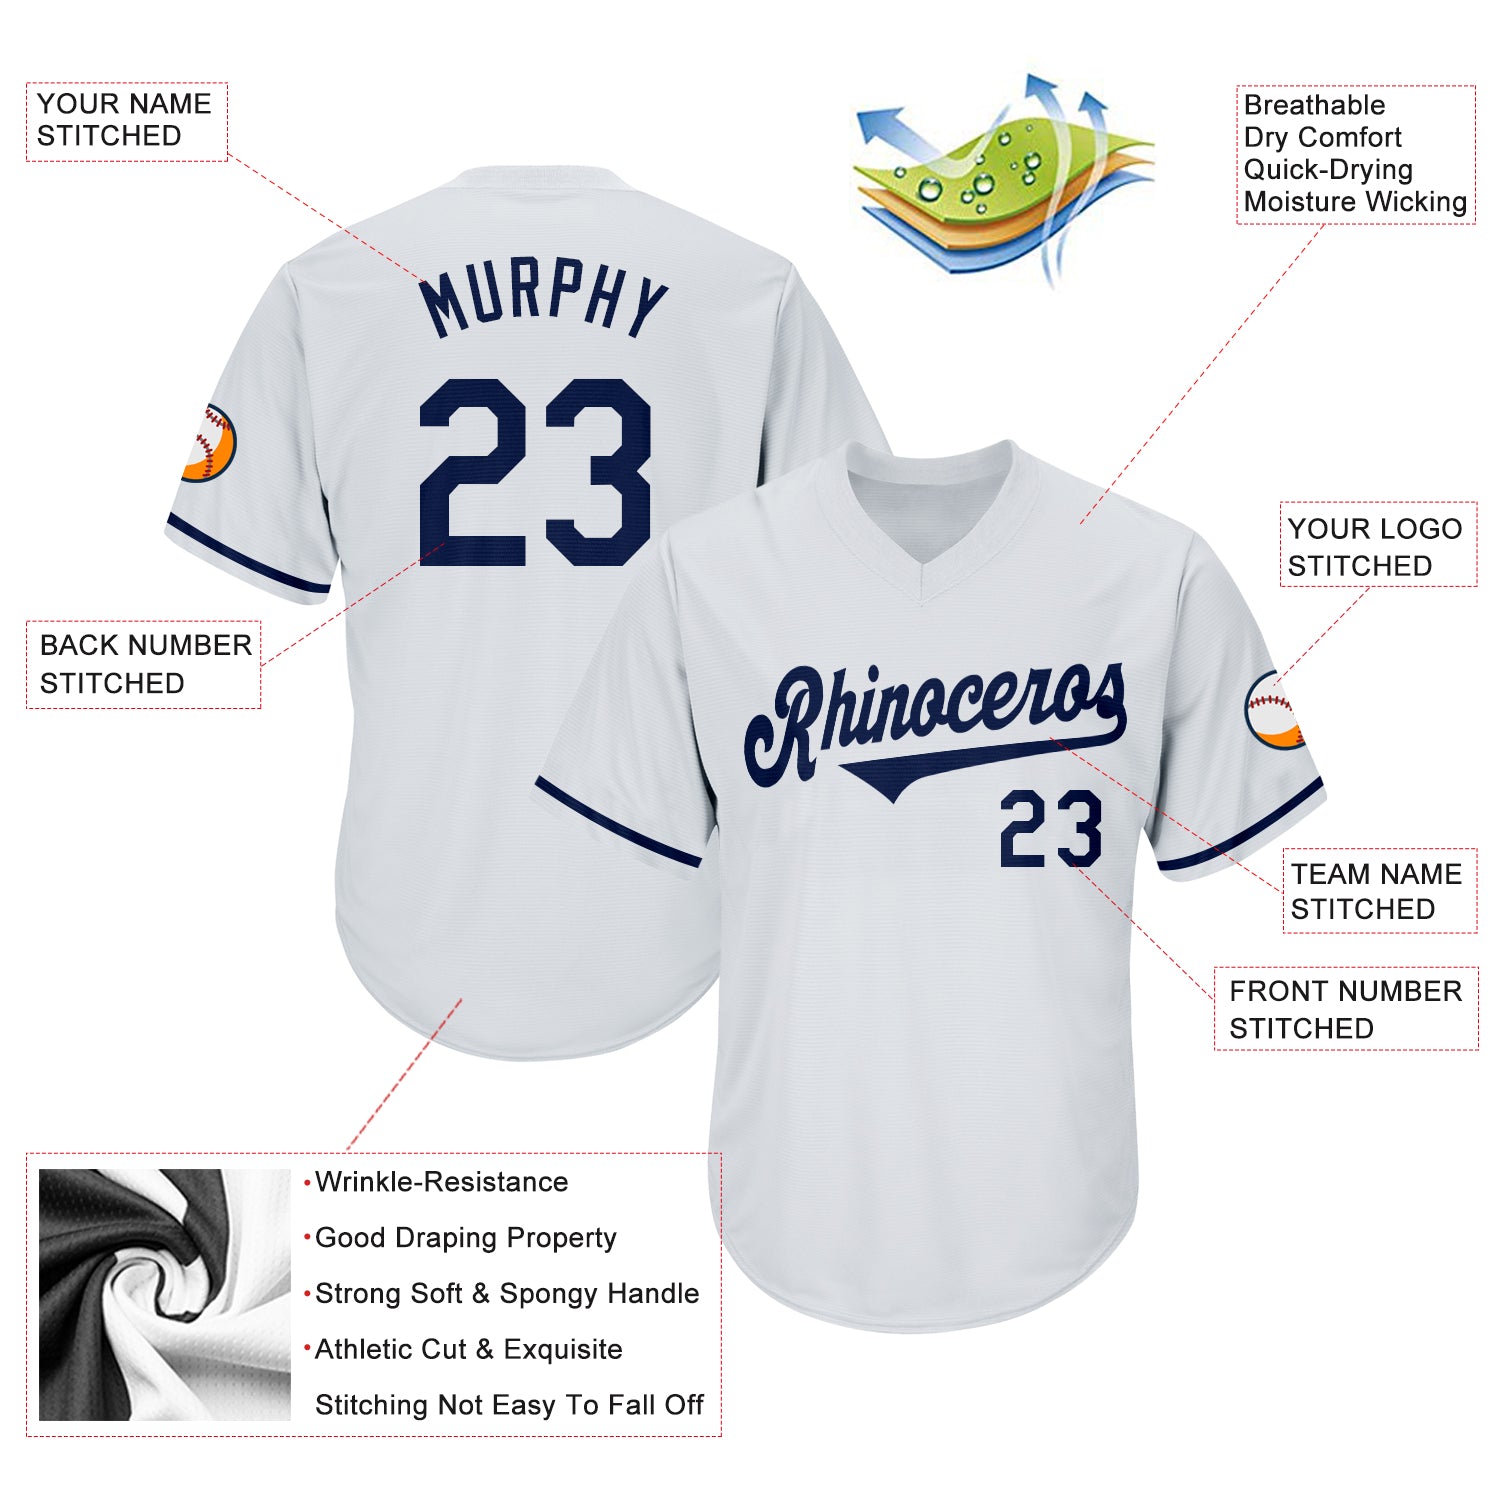 Custom White Navy Authentic Throwback Rib-Knit Baseball Jersey Shirt